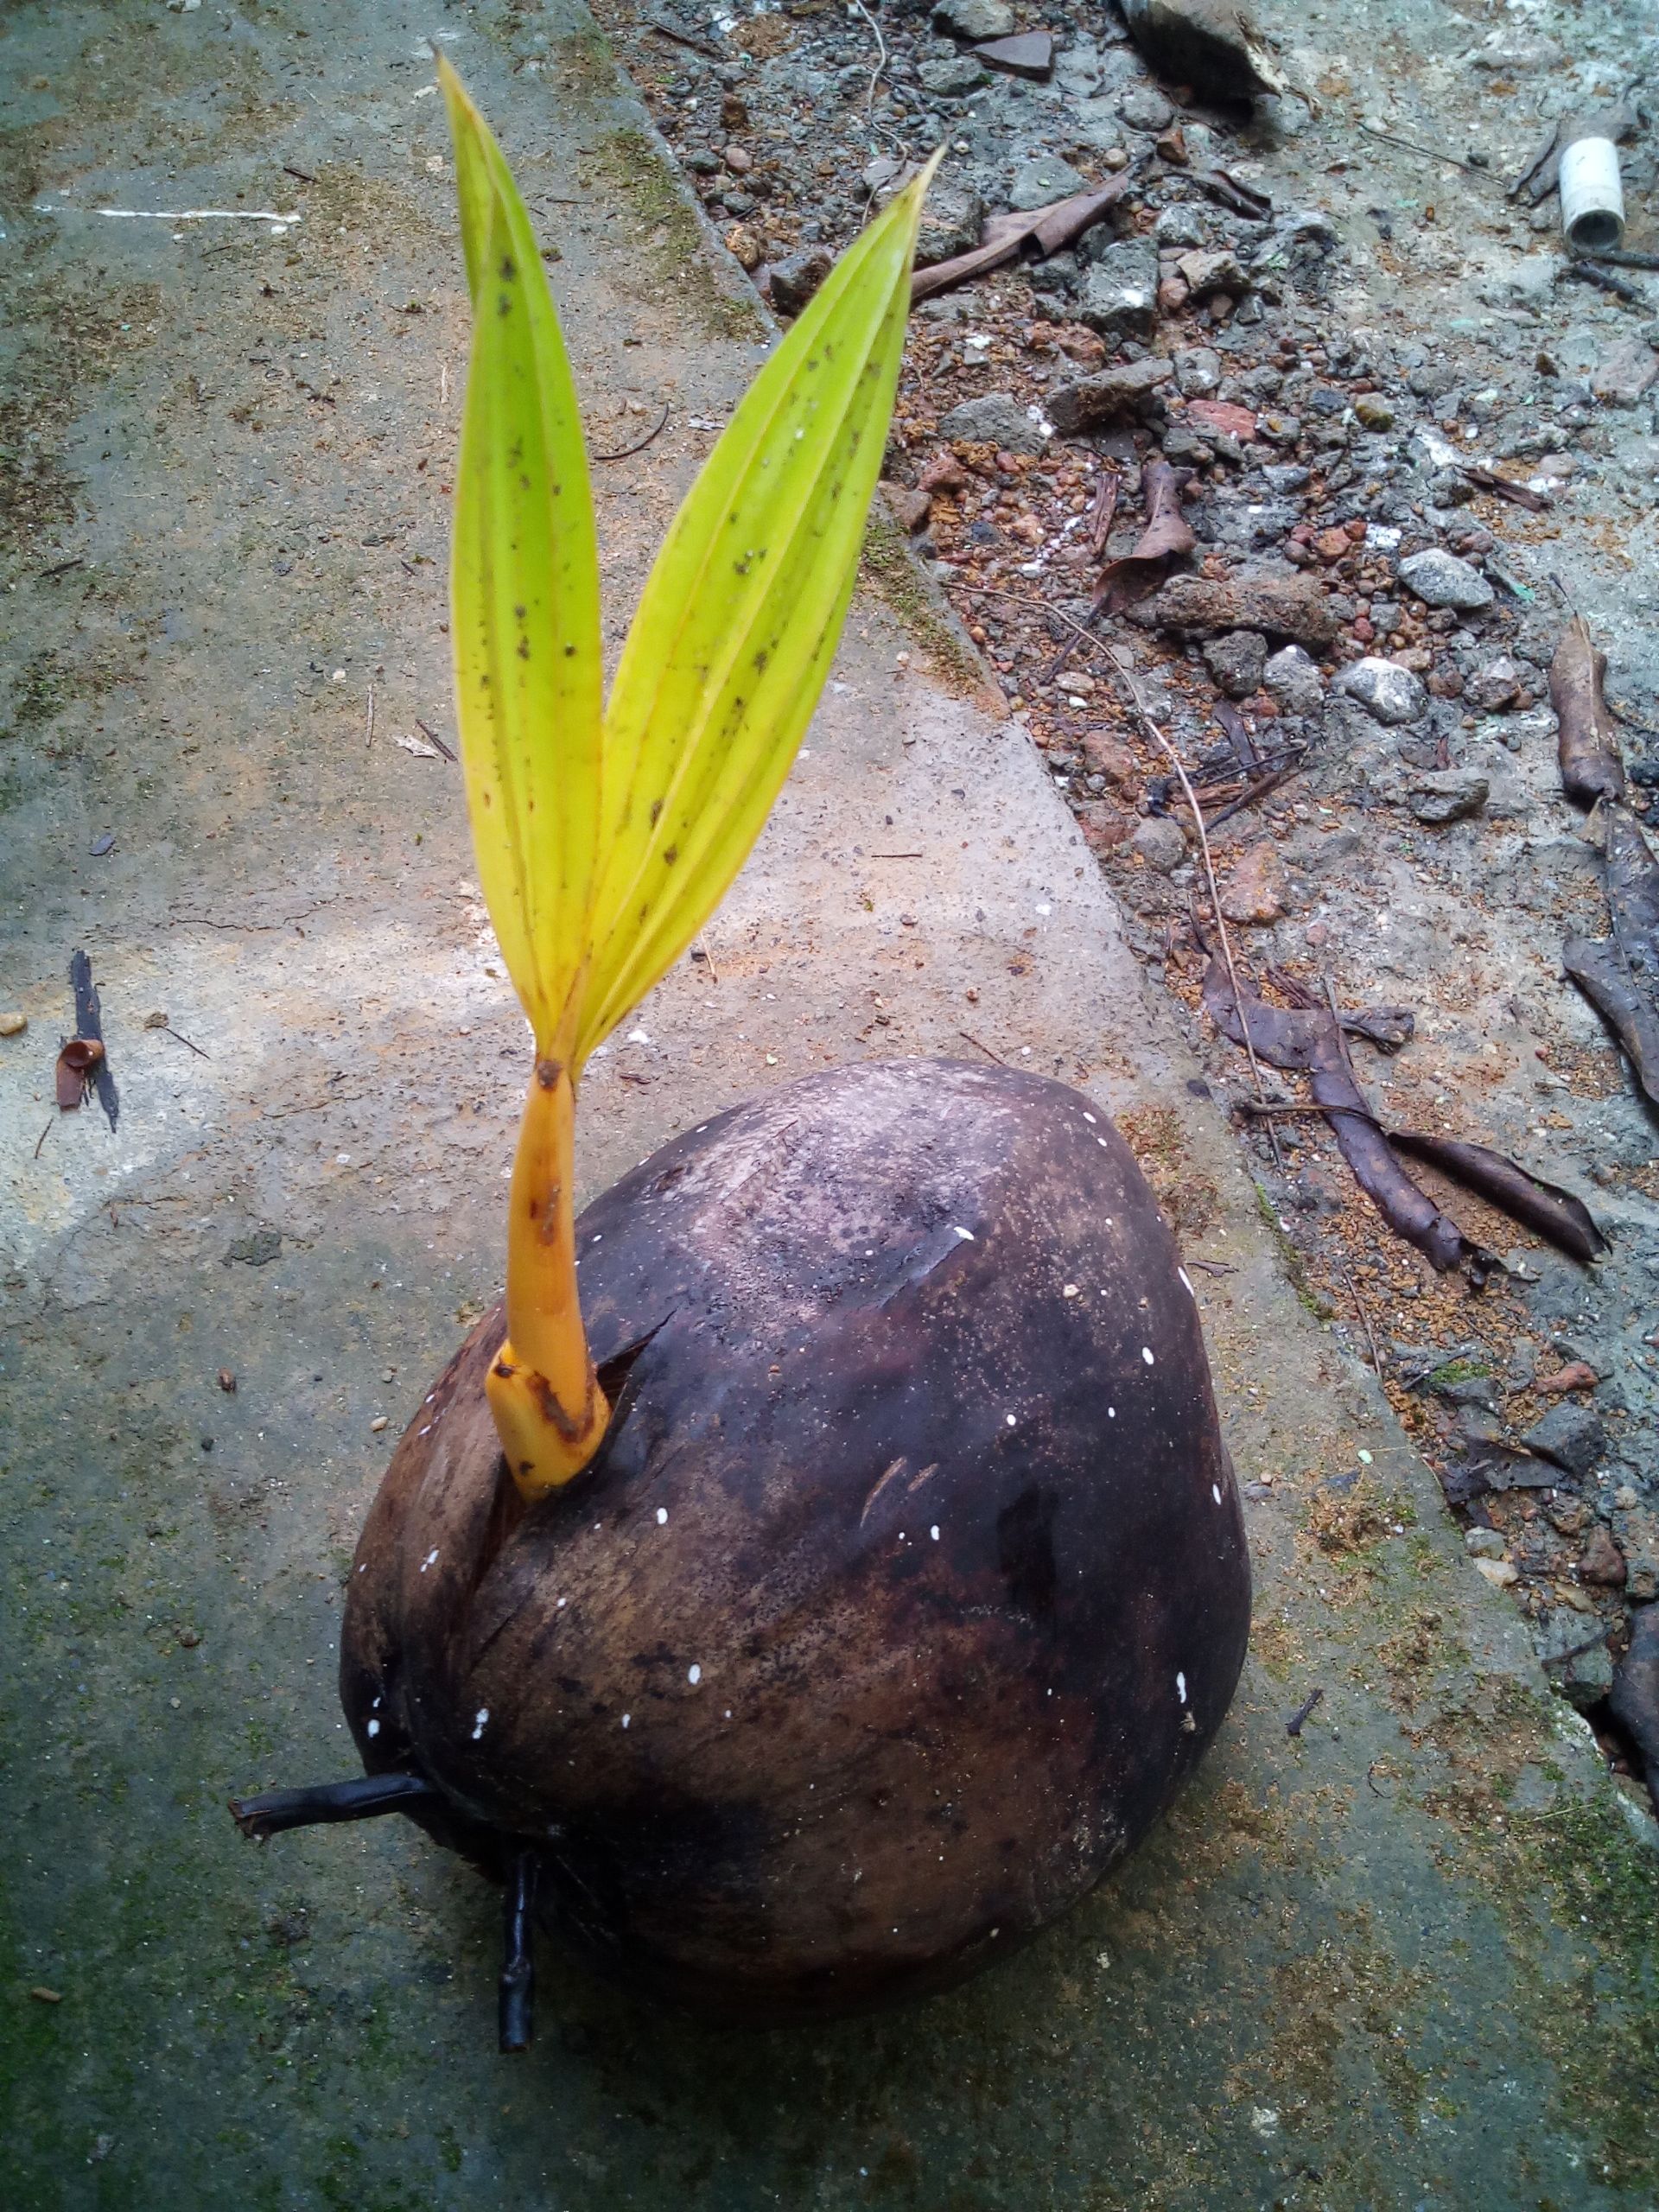 File:Coconut seedling.jpg - Wikimedia Commons